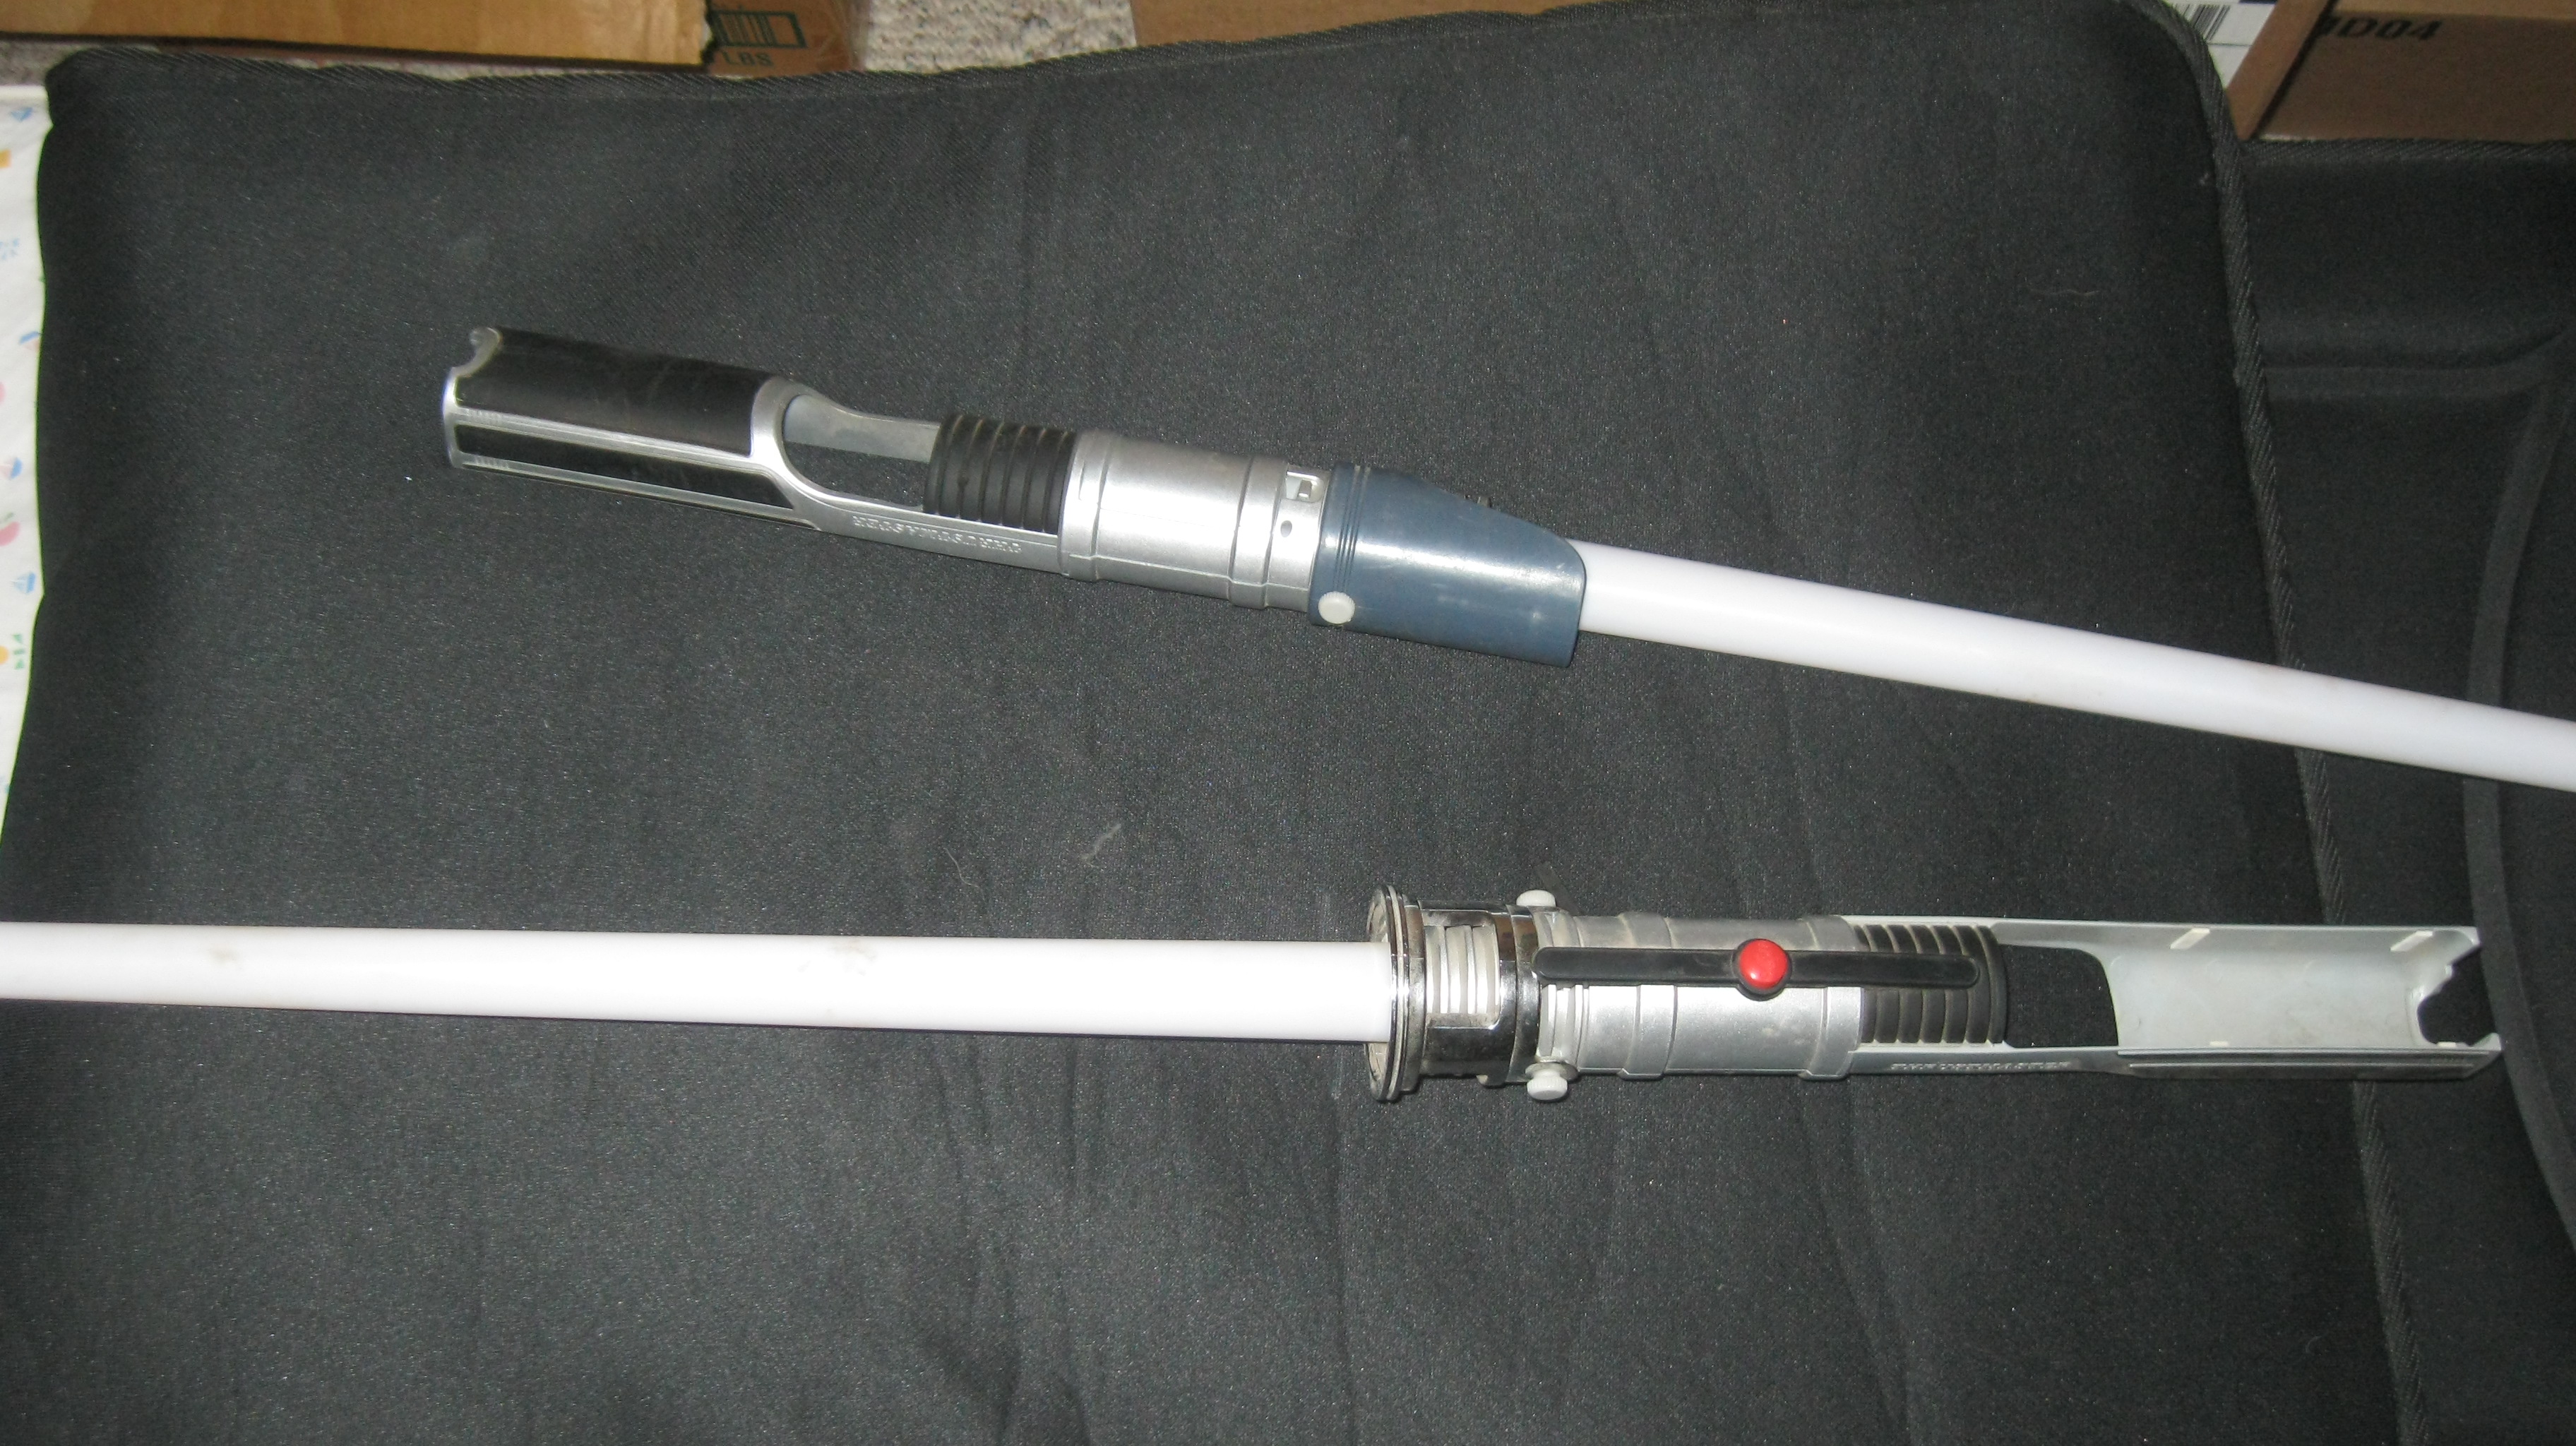 wii star wars light saber controllers set of 2